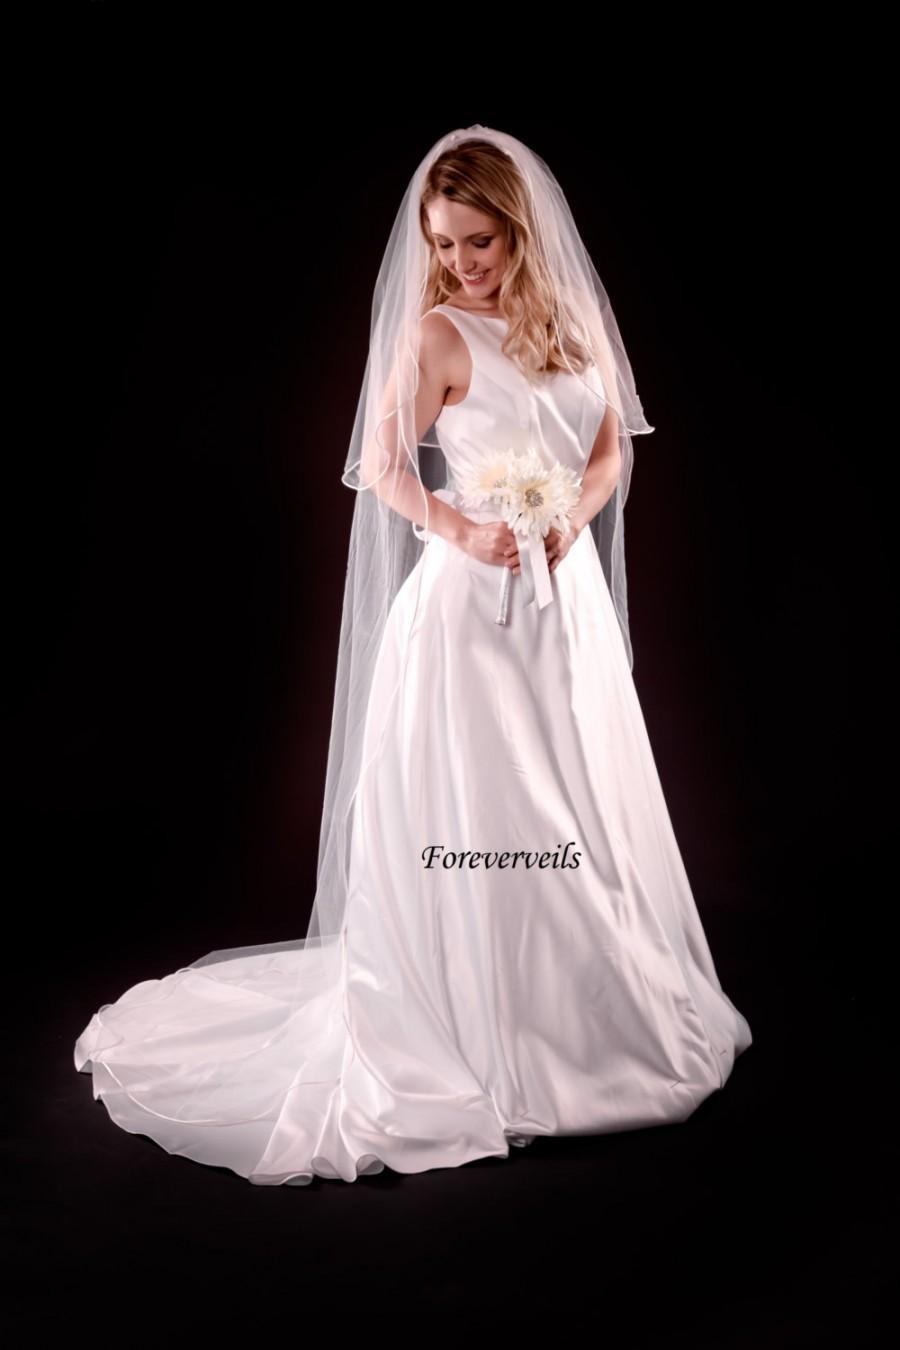 Wedding - 2 layer cathedral wedding veil long flowing bridal veil - white, ivory, diamond white, champagne - cut edge satin edge